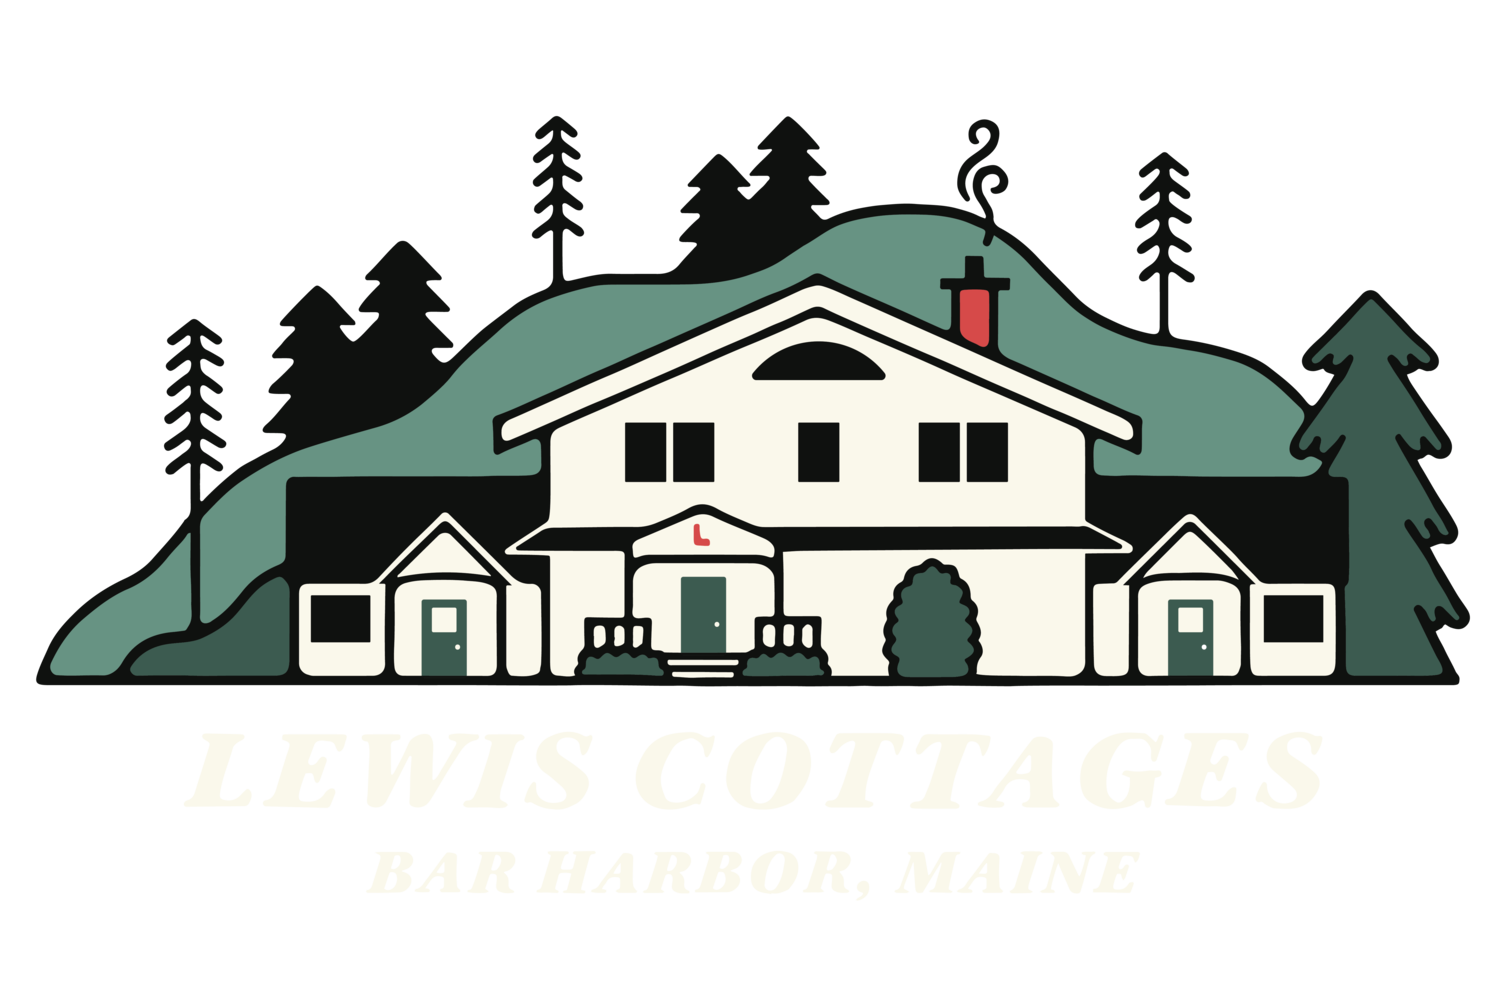 Lewis Cottages